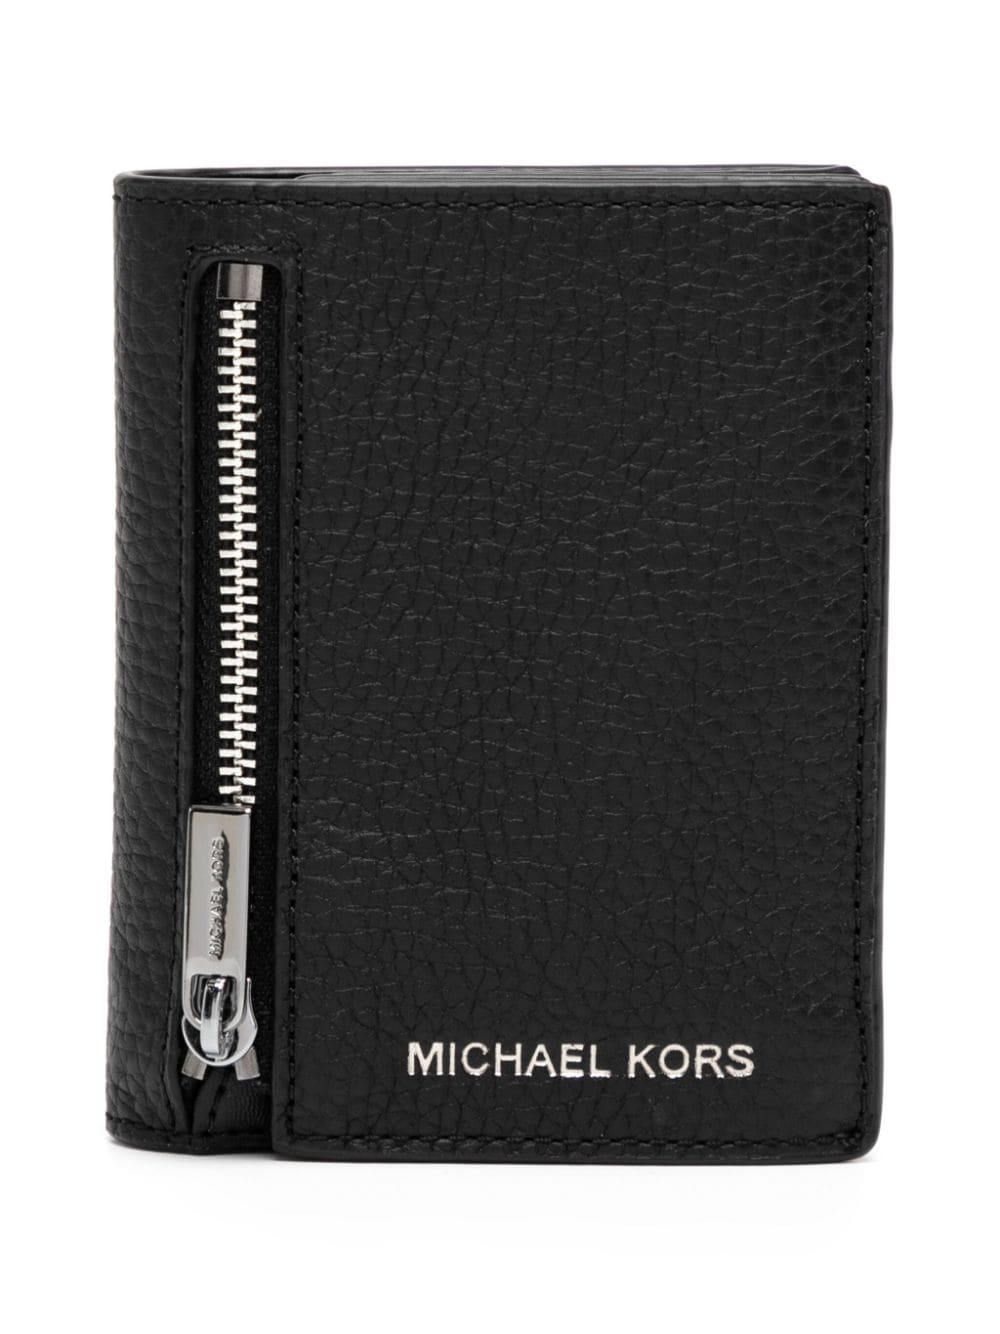 Michael Kors Hudson leather wallet - Black von Michael Kors